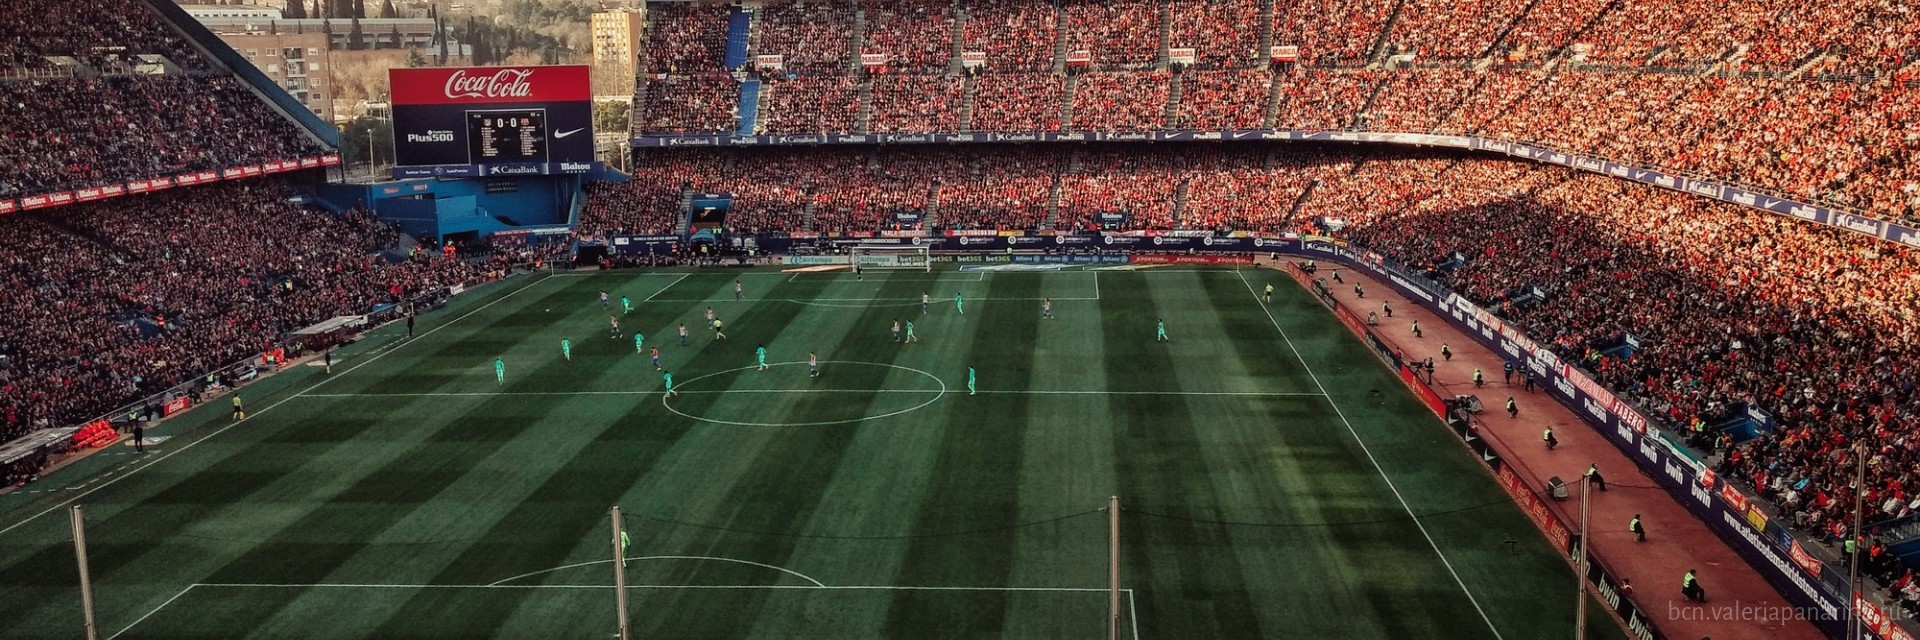 Фан зона большого испанского футбола